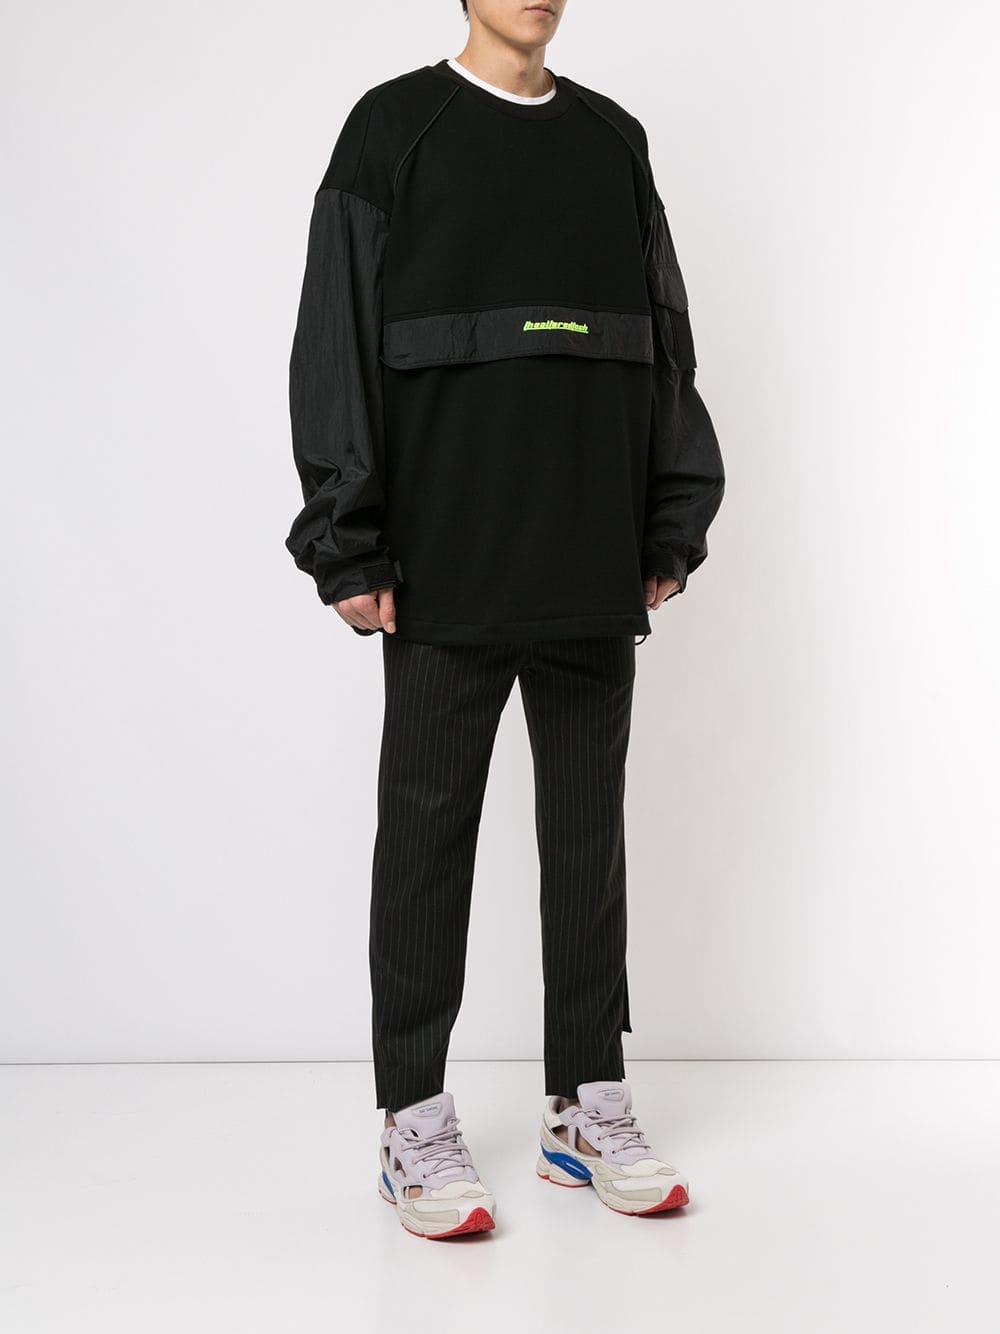 Juun.J Synthetic Logo Sweatshirt in Black for Men - Lyst